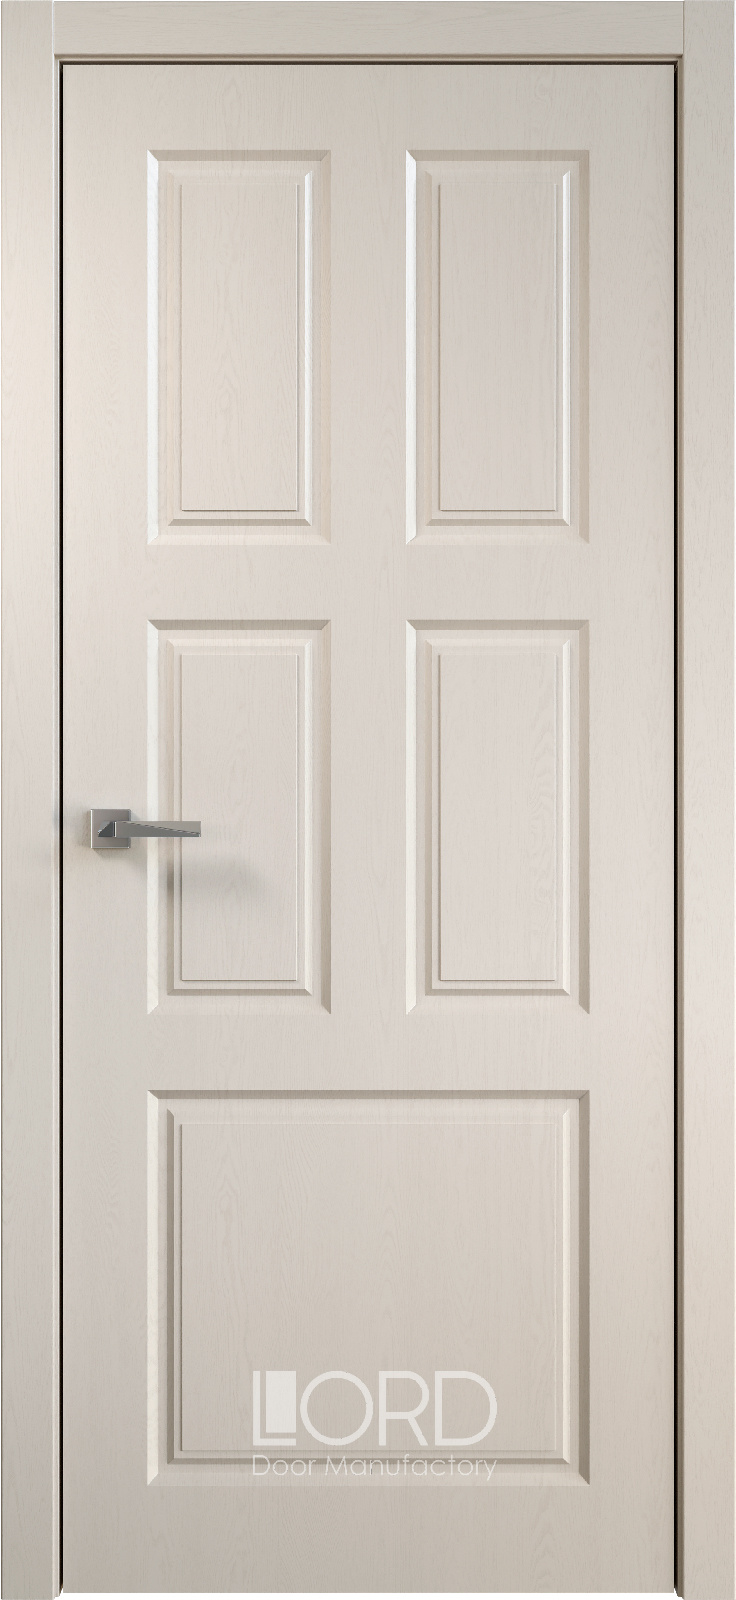 Лорд Межкомнатная дверь K 12 ДГ, арт. 22841 - фото №1